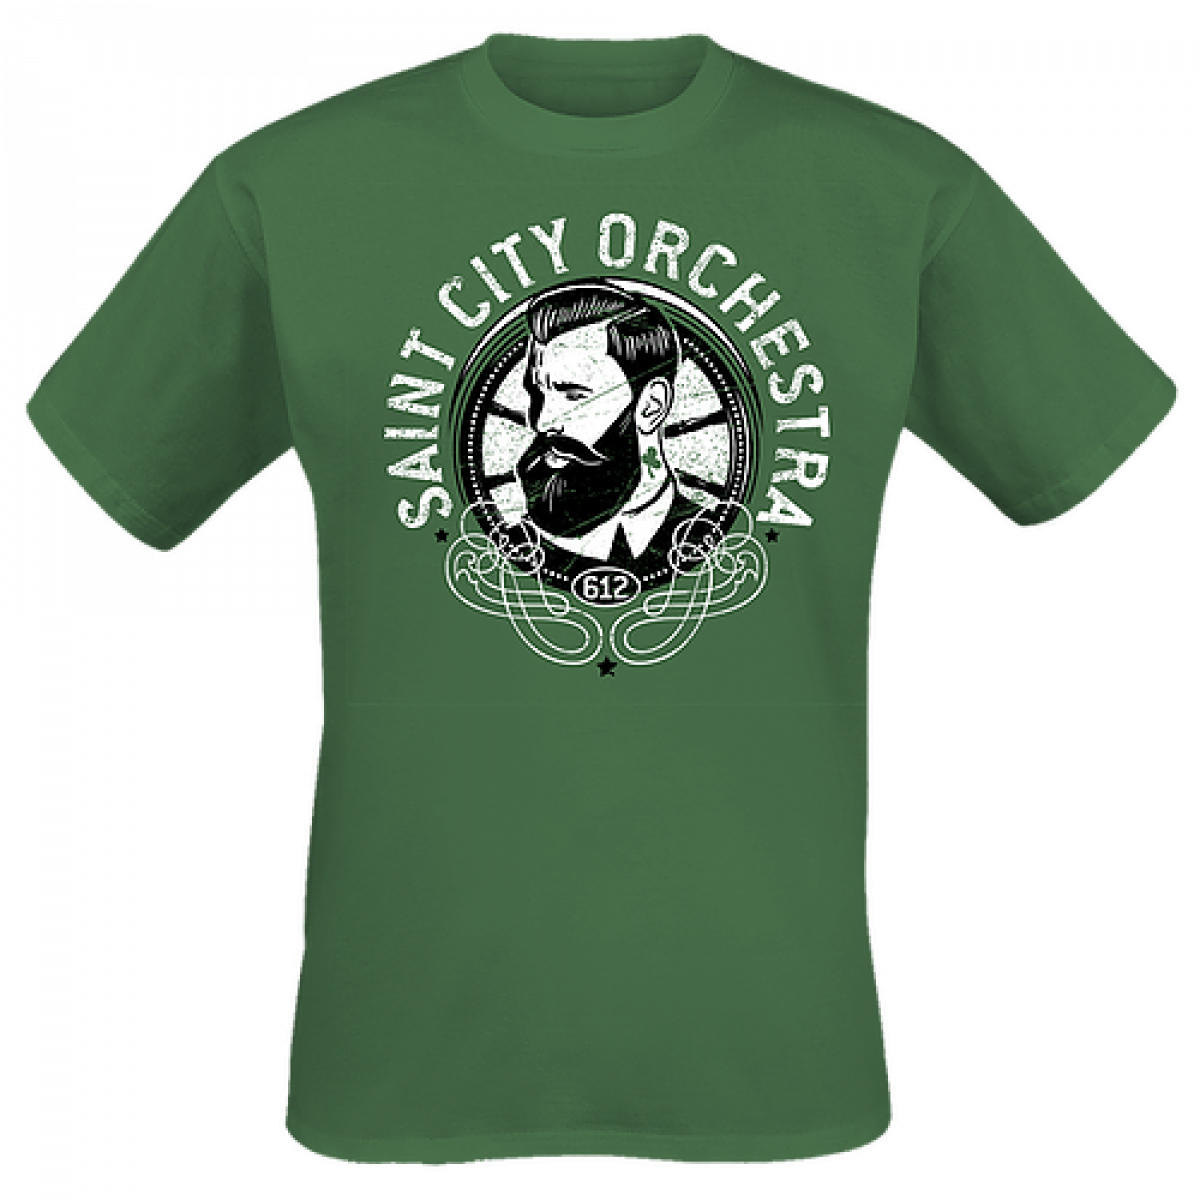 Saint City Orchestra – T-Shirt Beard Guy (green)